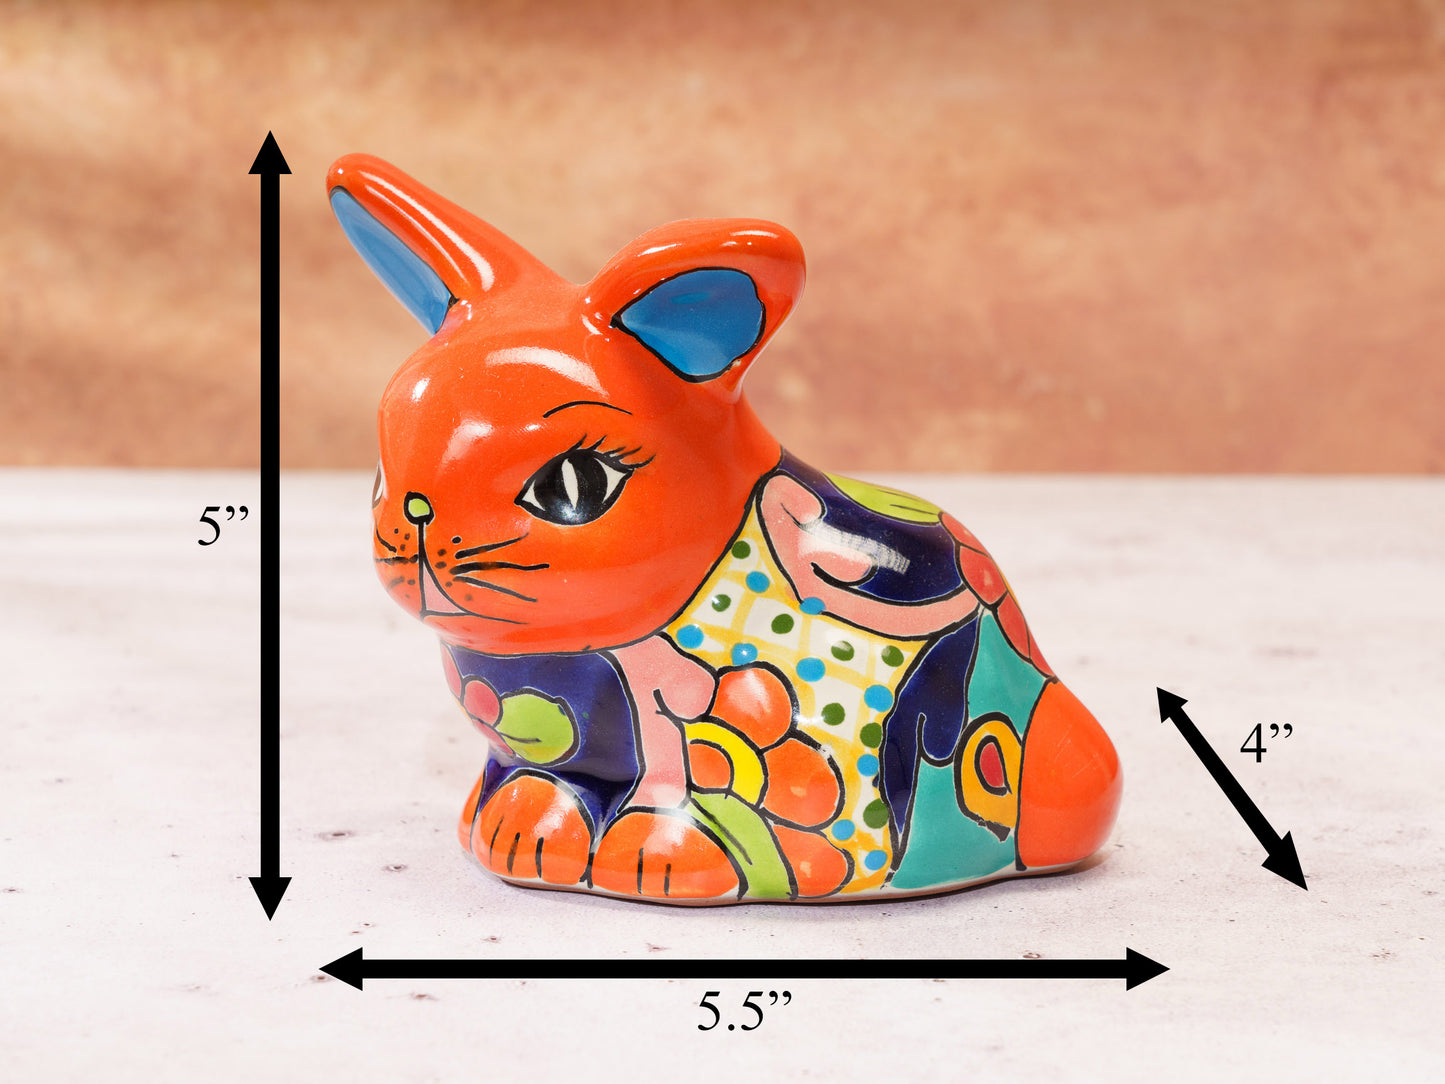 Bunny Figure - Small - Orange